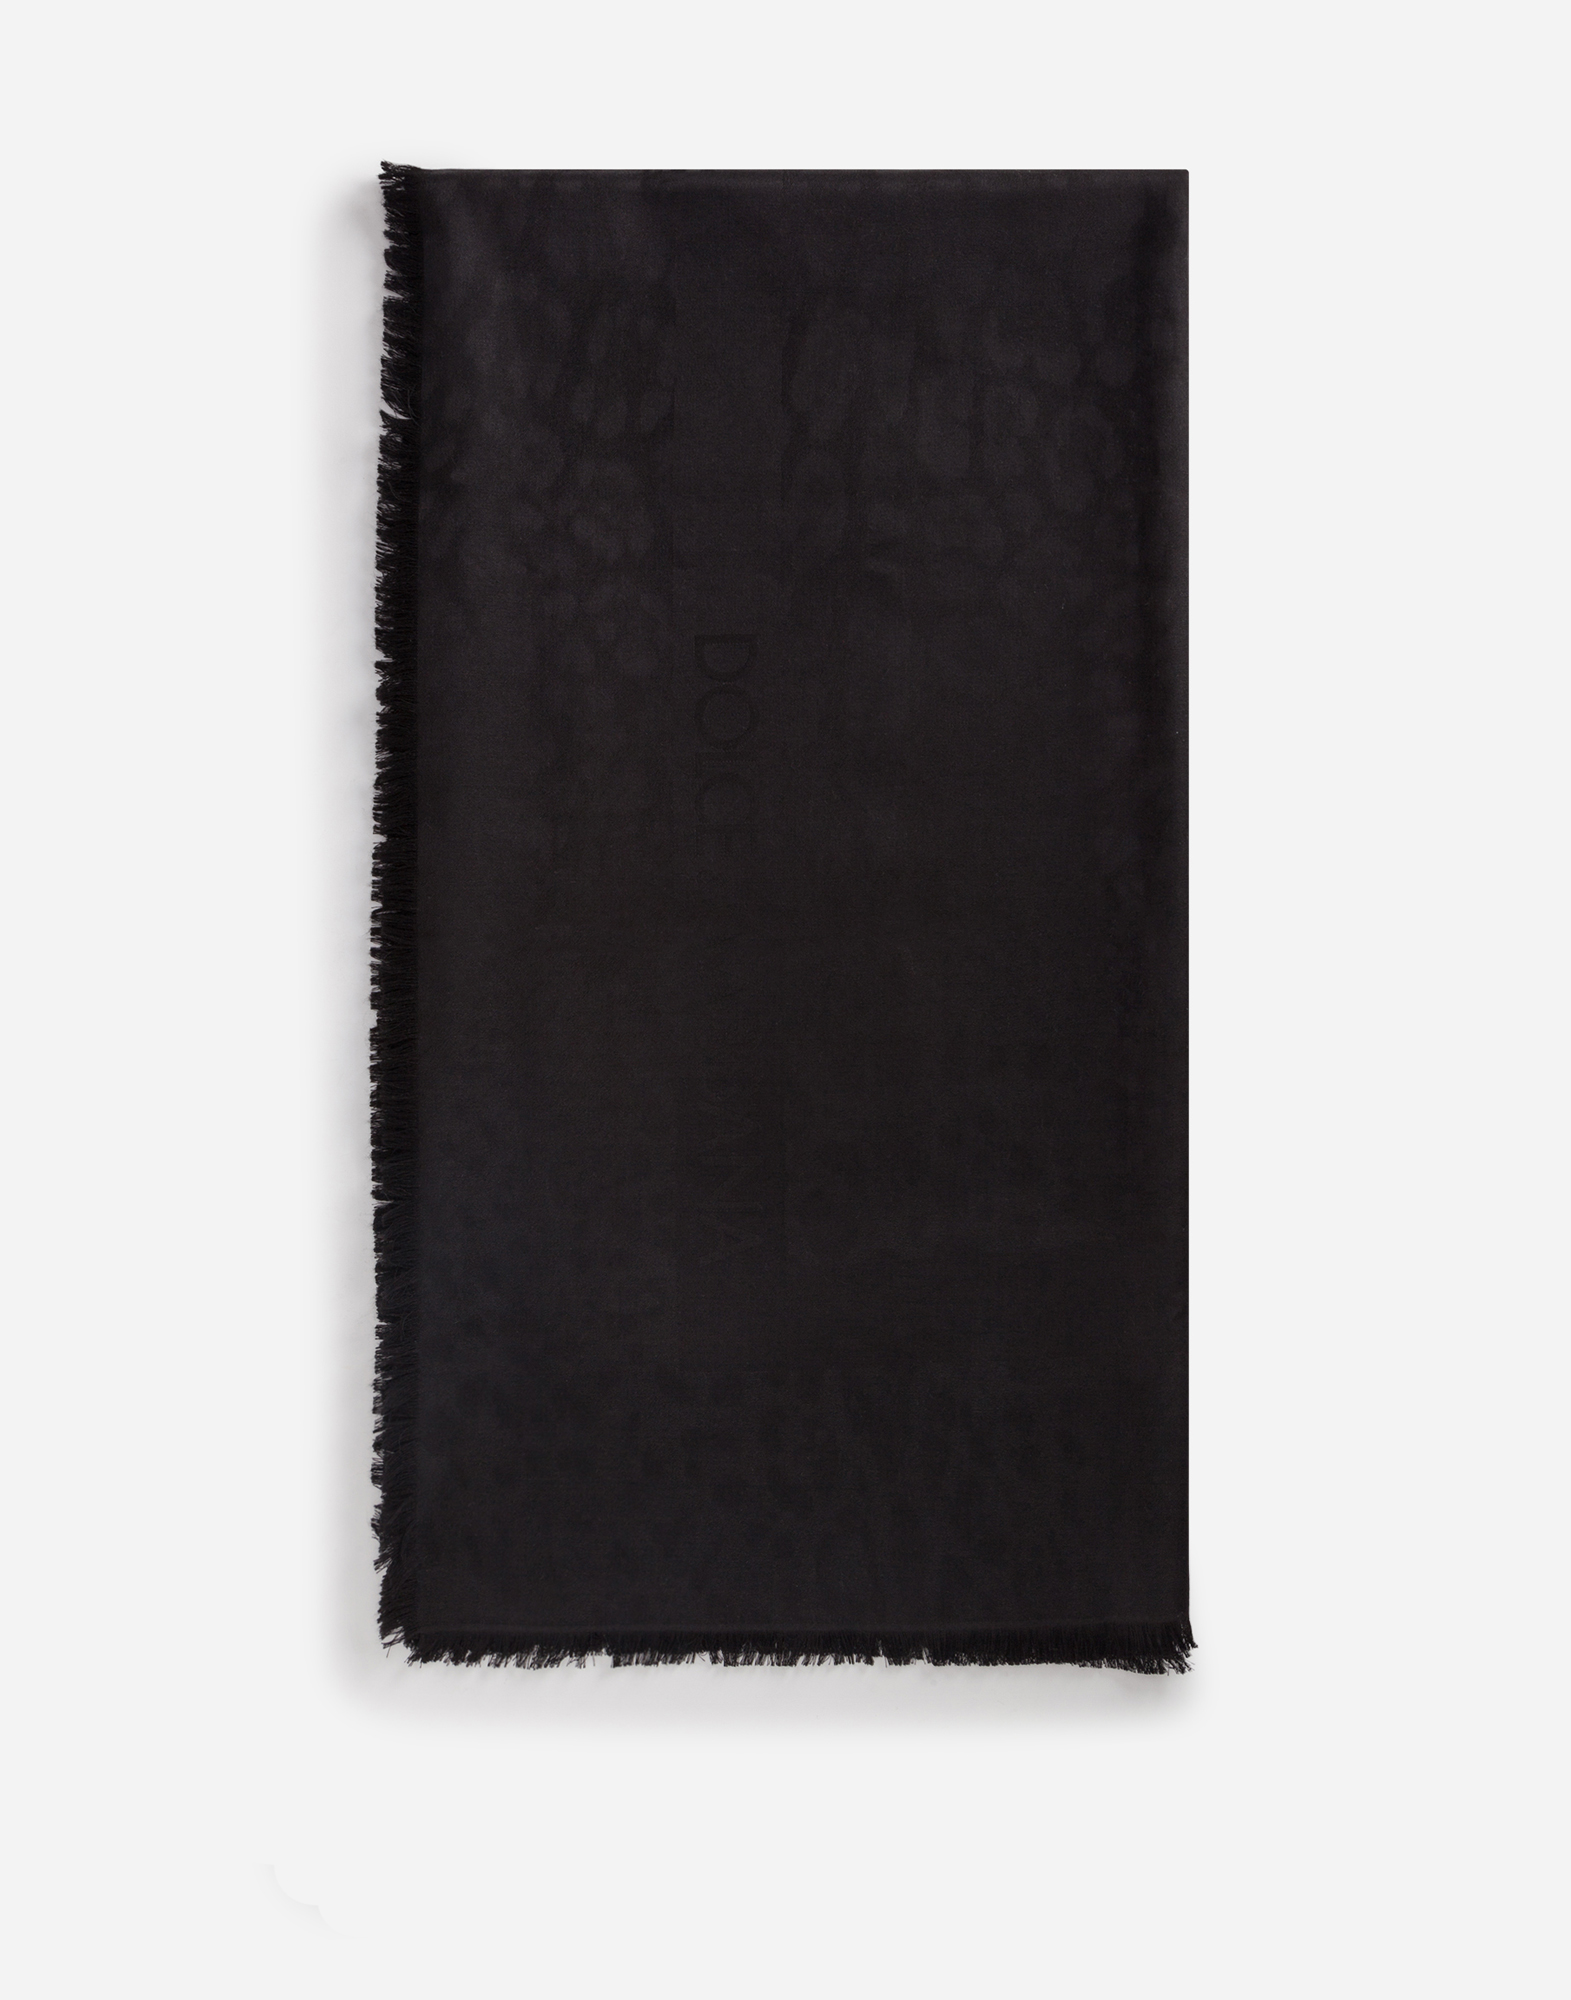 Foulard in wool and leopard print silk jacquard: 140 x 140cm- 55 x 55 inches in Black